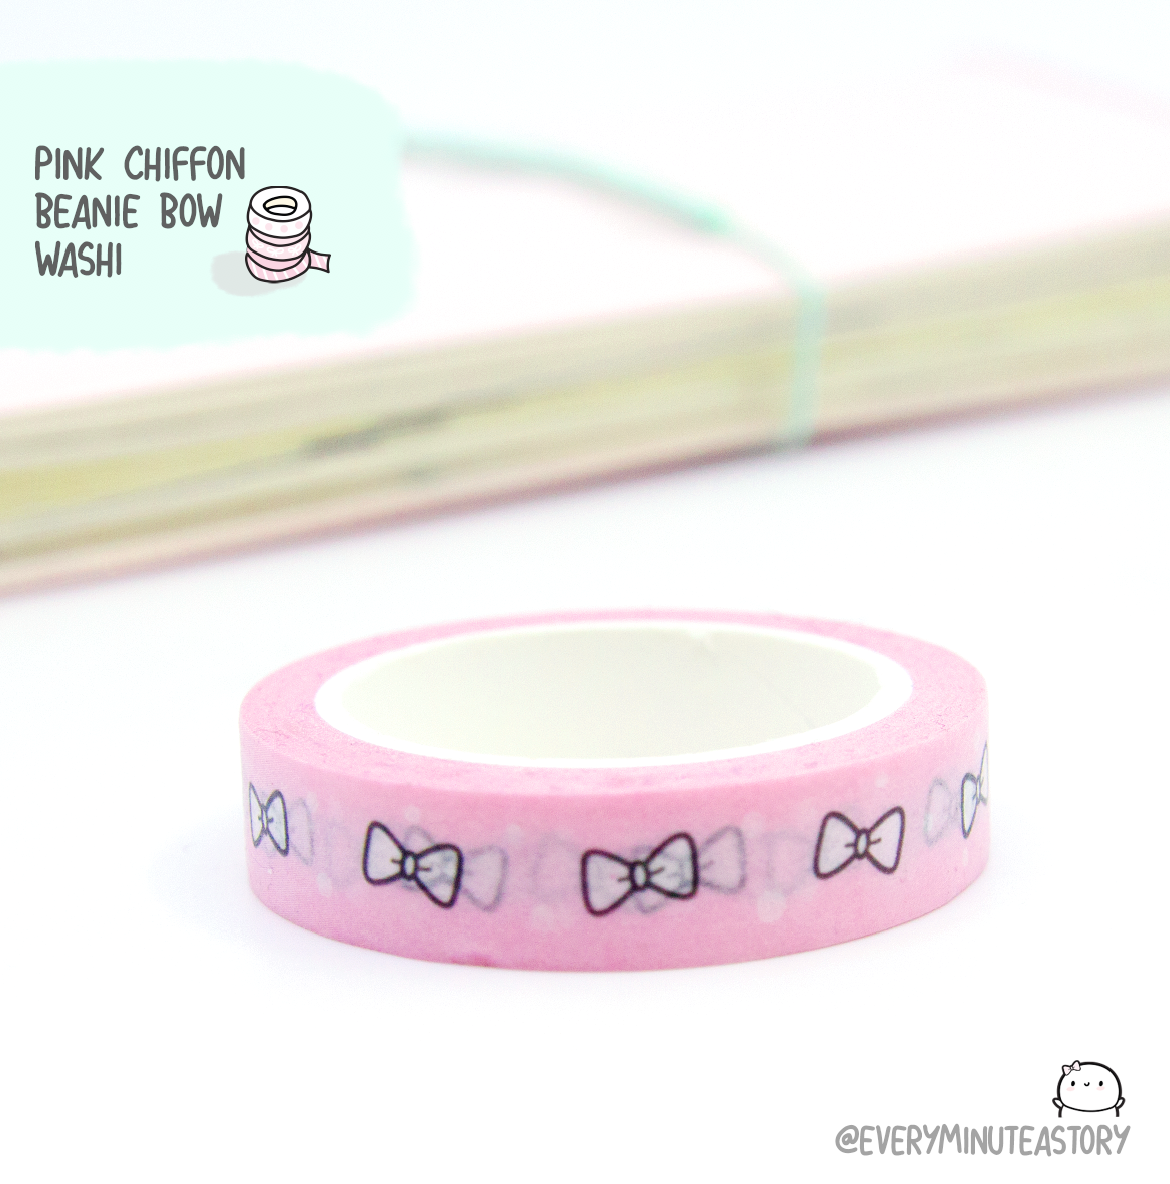 Limited Stock! Pink Chiffon Beanie bow washi tape-LOW STOCK!